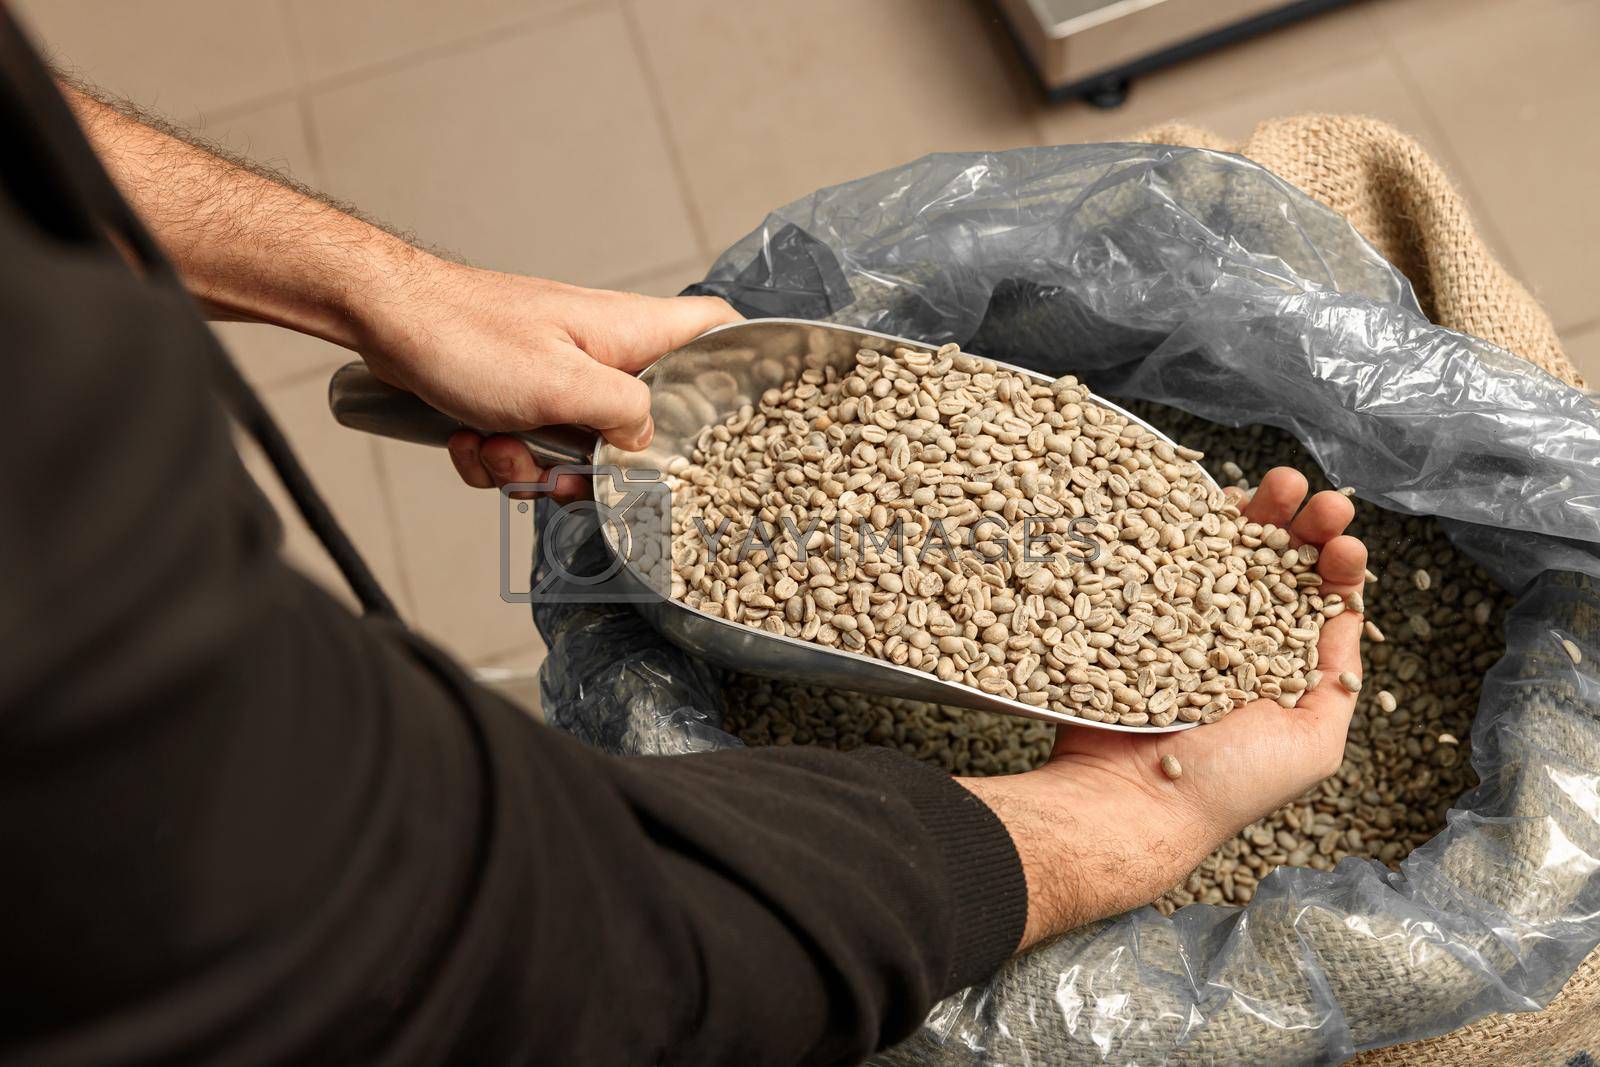 Royalty free image of raw coffee testing before roast by Yaroslav_astakhov